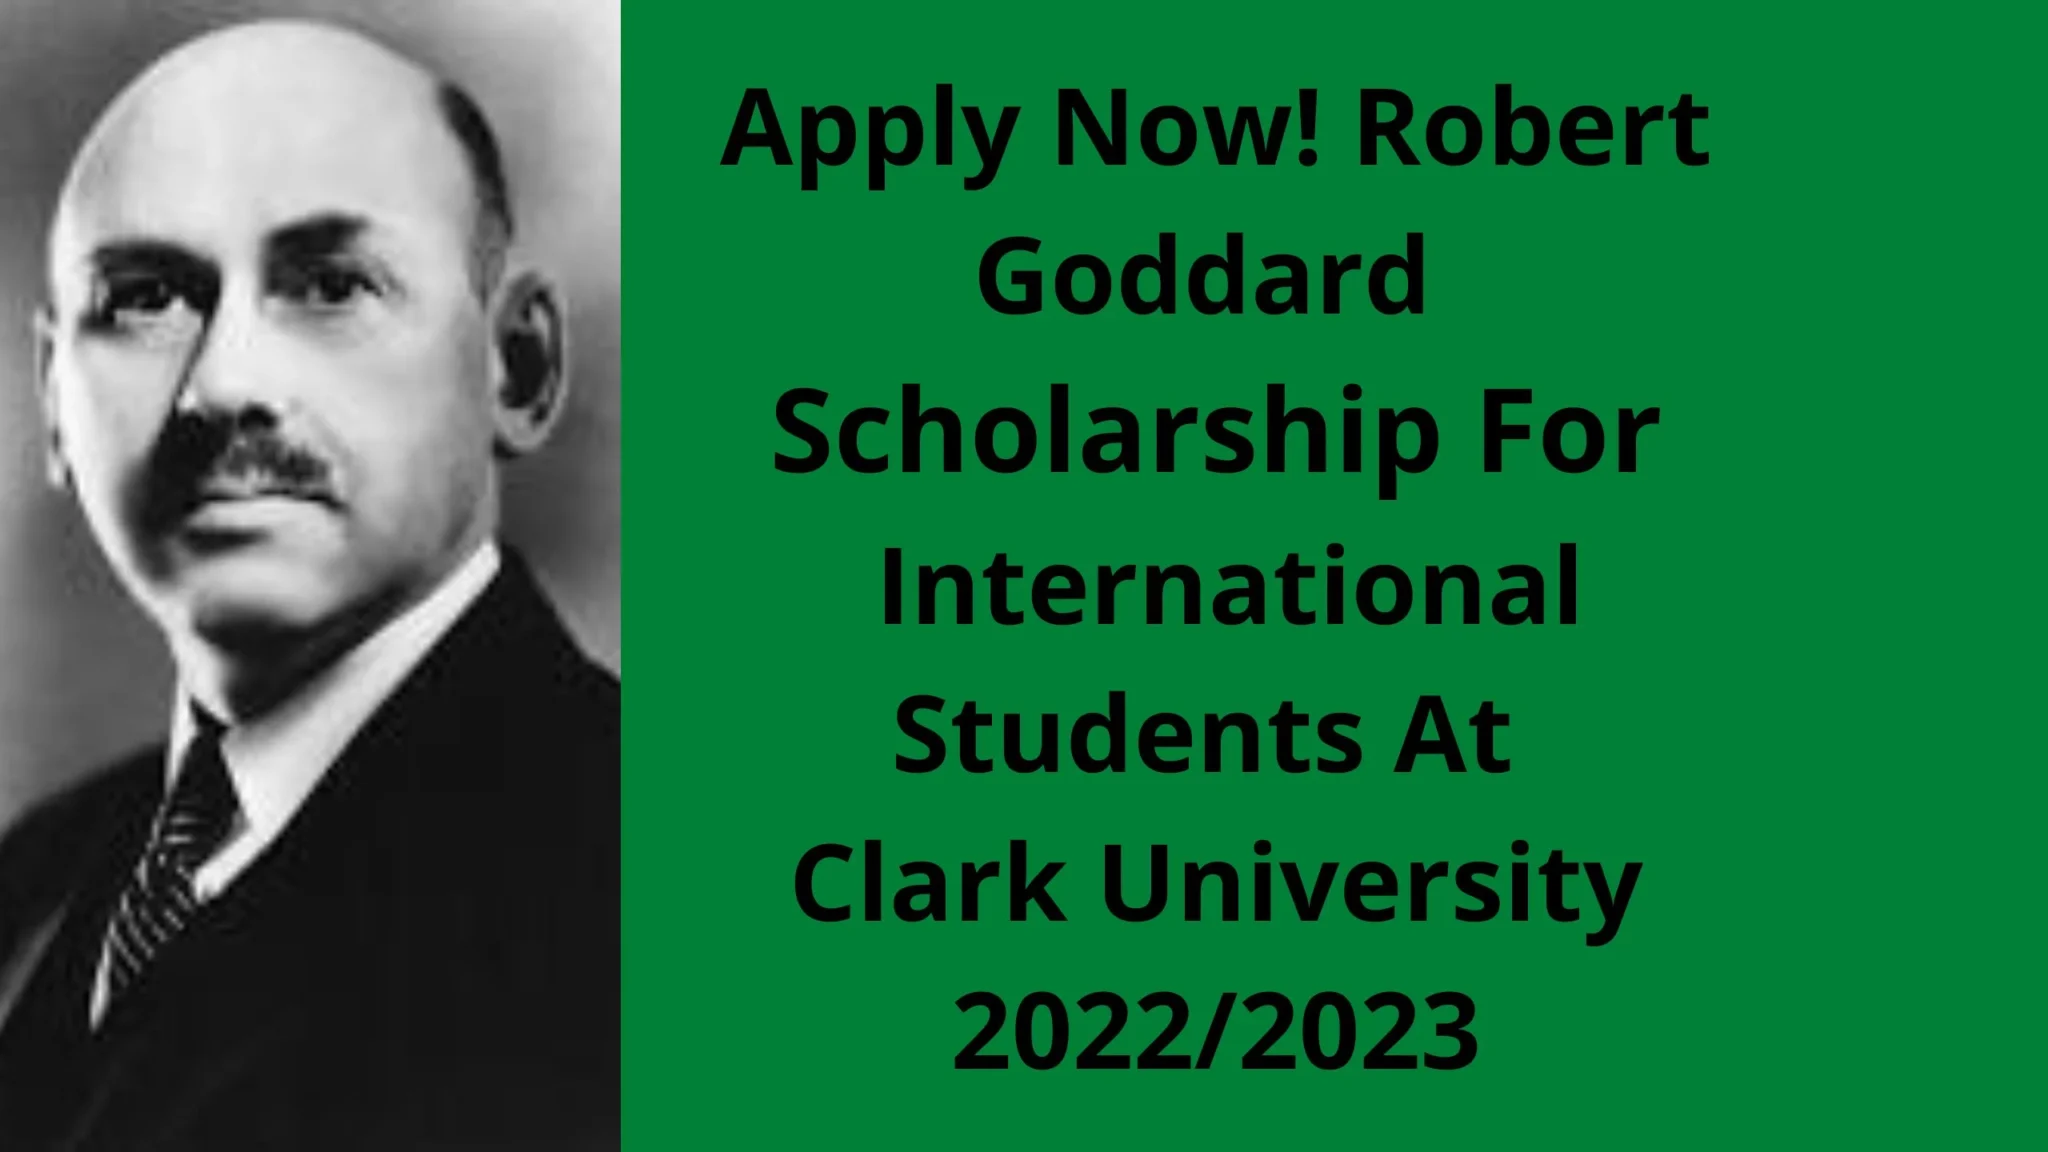 Apply Now! Robert Goddard Scholarship For International Students At Clark University 2022/2023